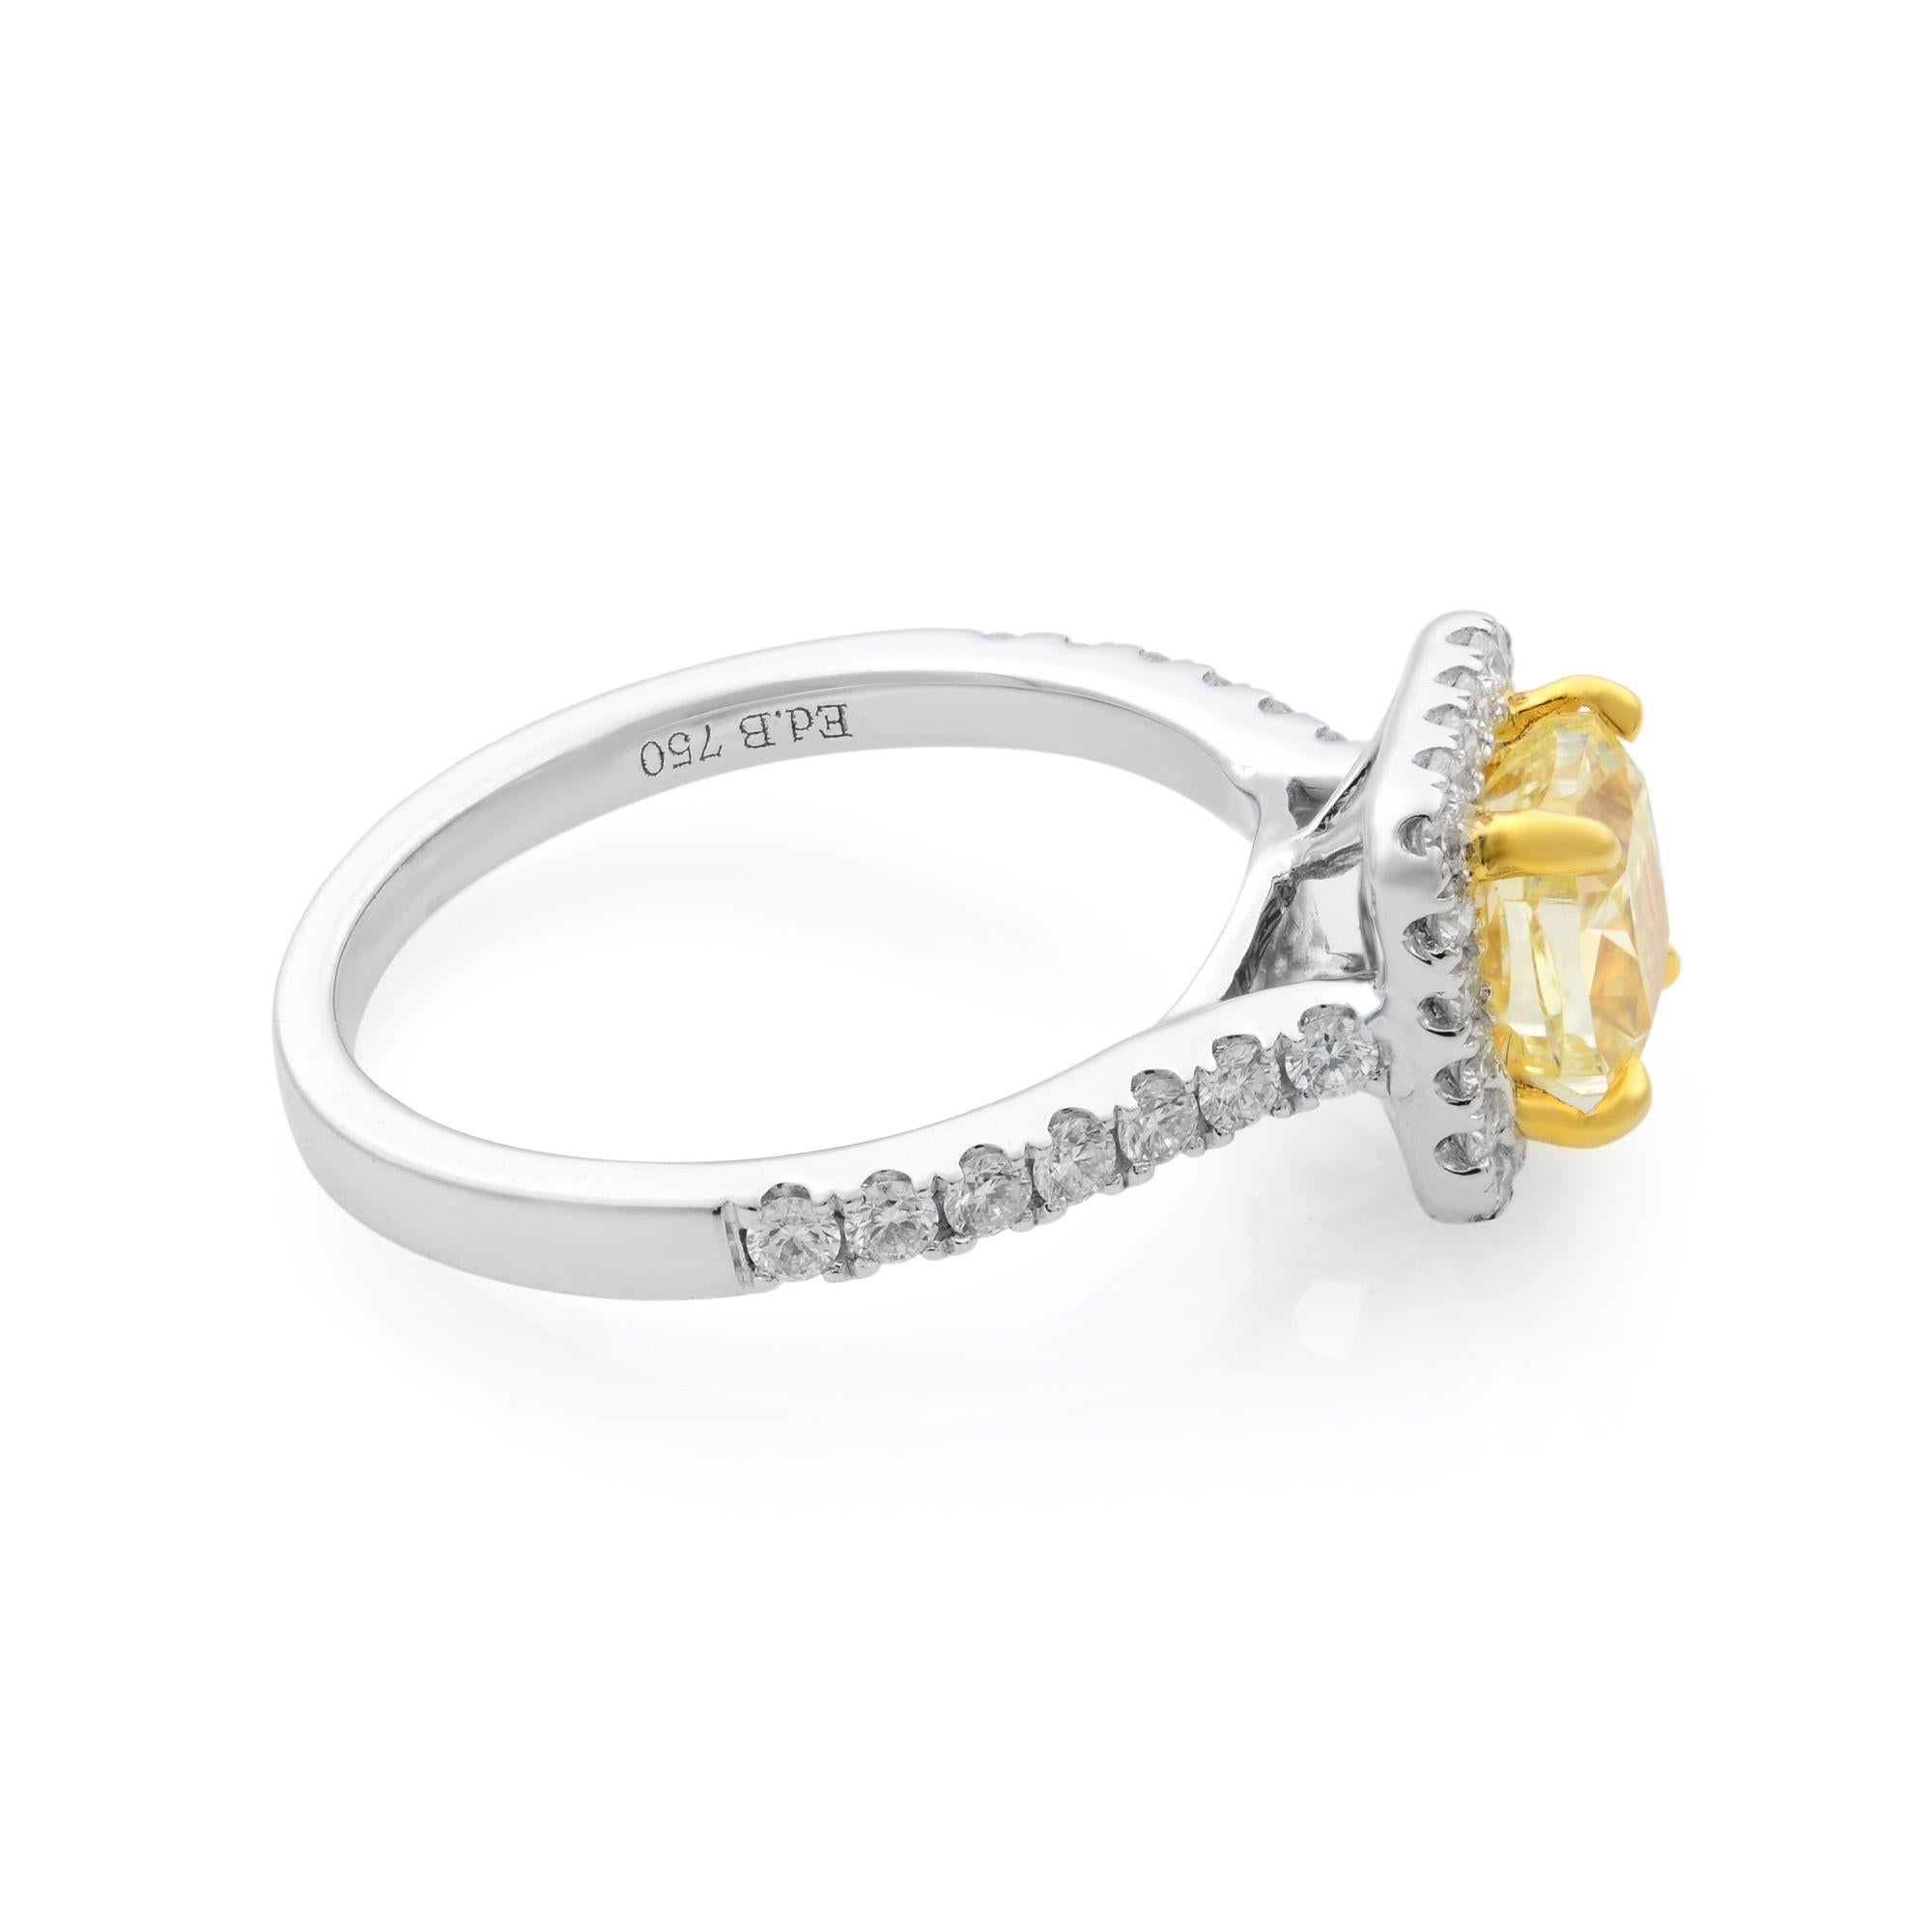 Modern Rachel Koen 18 Karat White Gold Fancy Yellow Diamond Ring with Halo 1.36 Carat